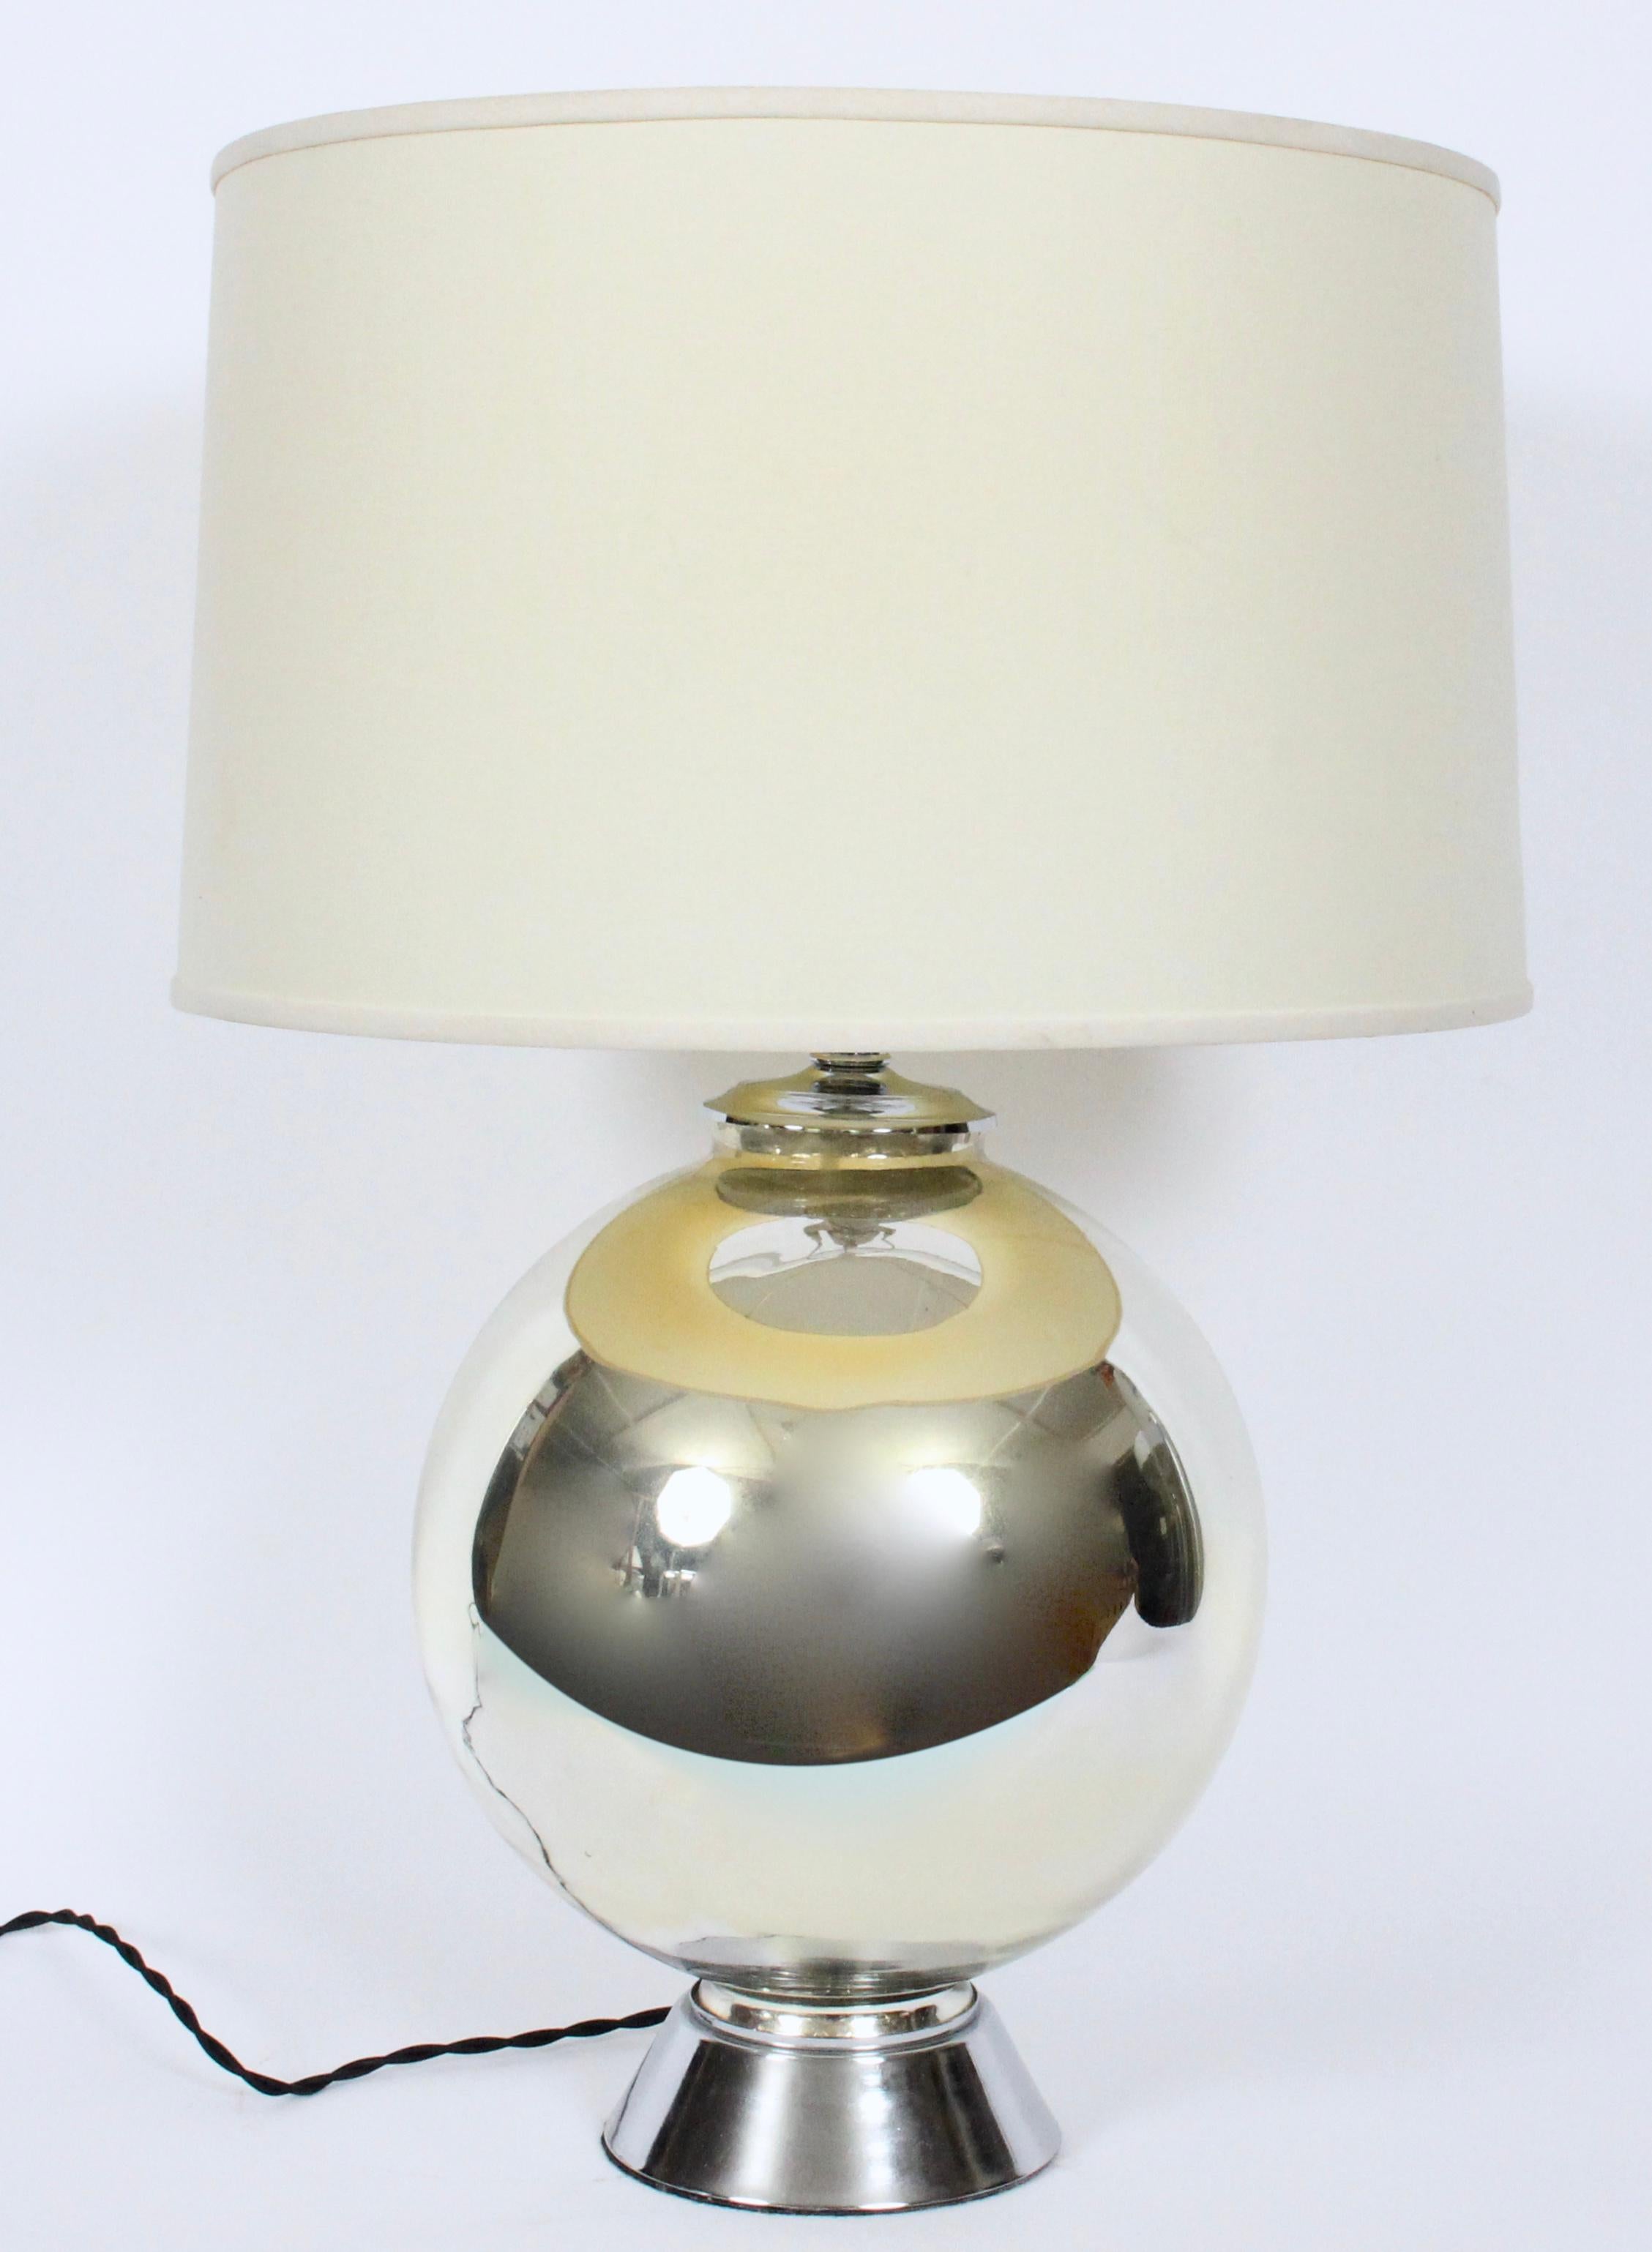 Chapman Co. Mercury Glass Ball Table Lamp, 1960's For Sale 6